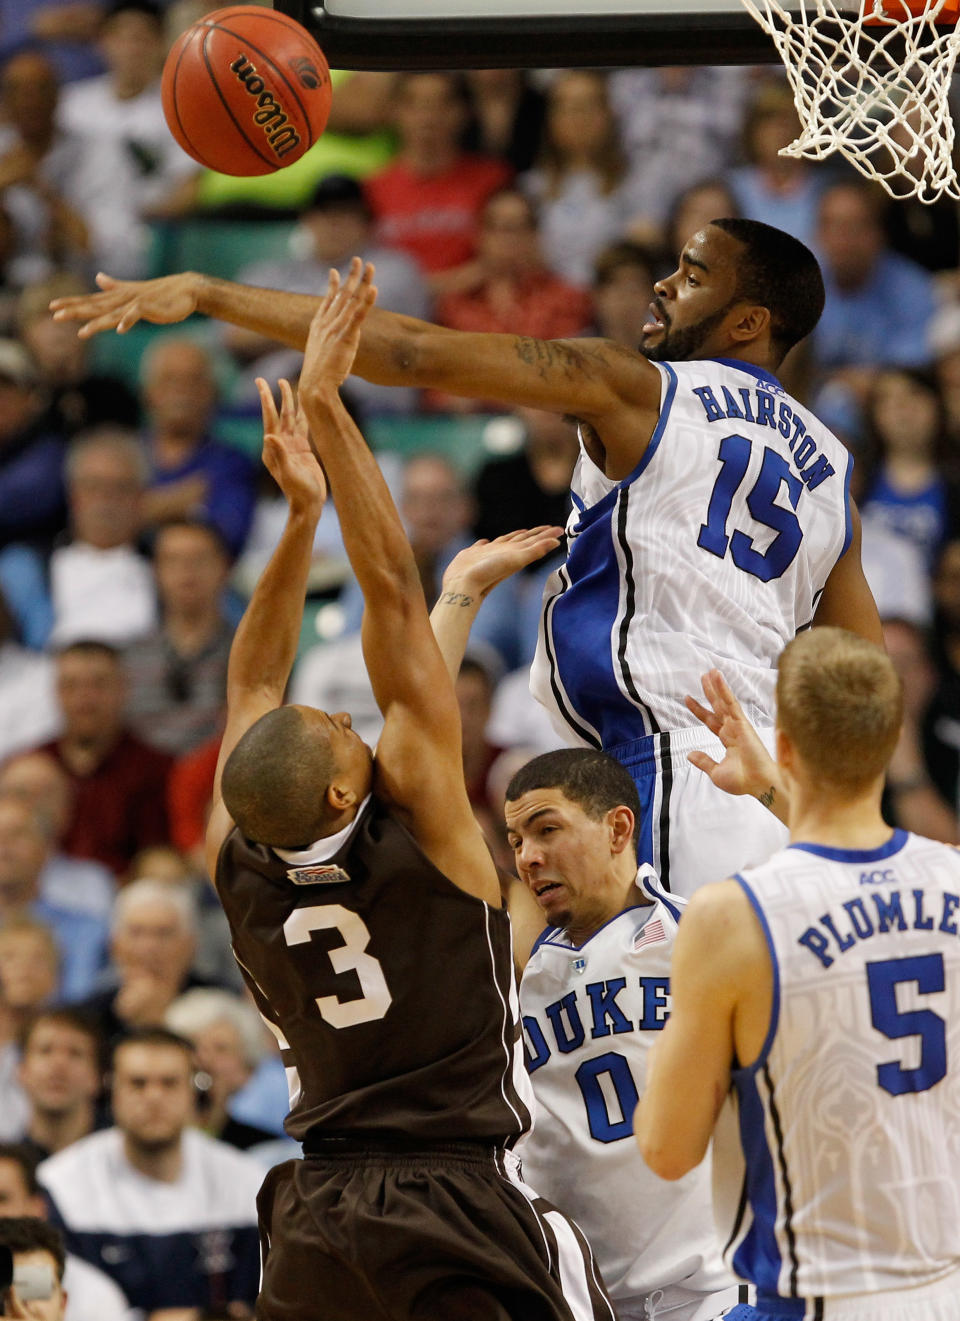 NCAA Basketball Tournament - Lehigh v Duke